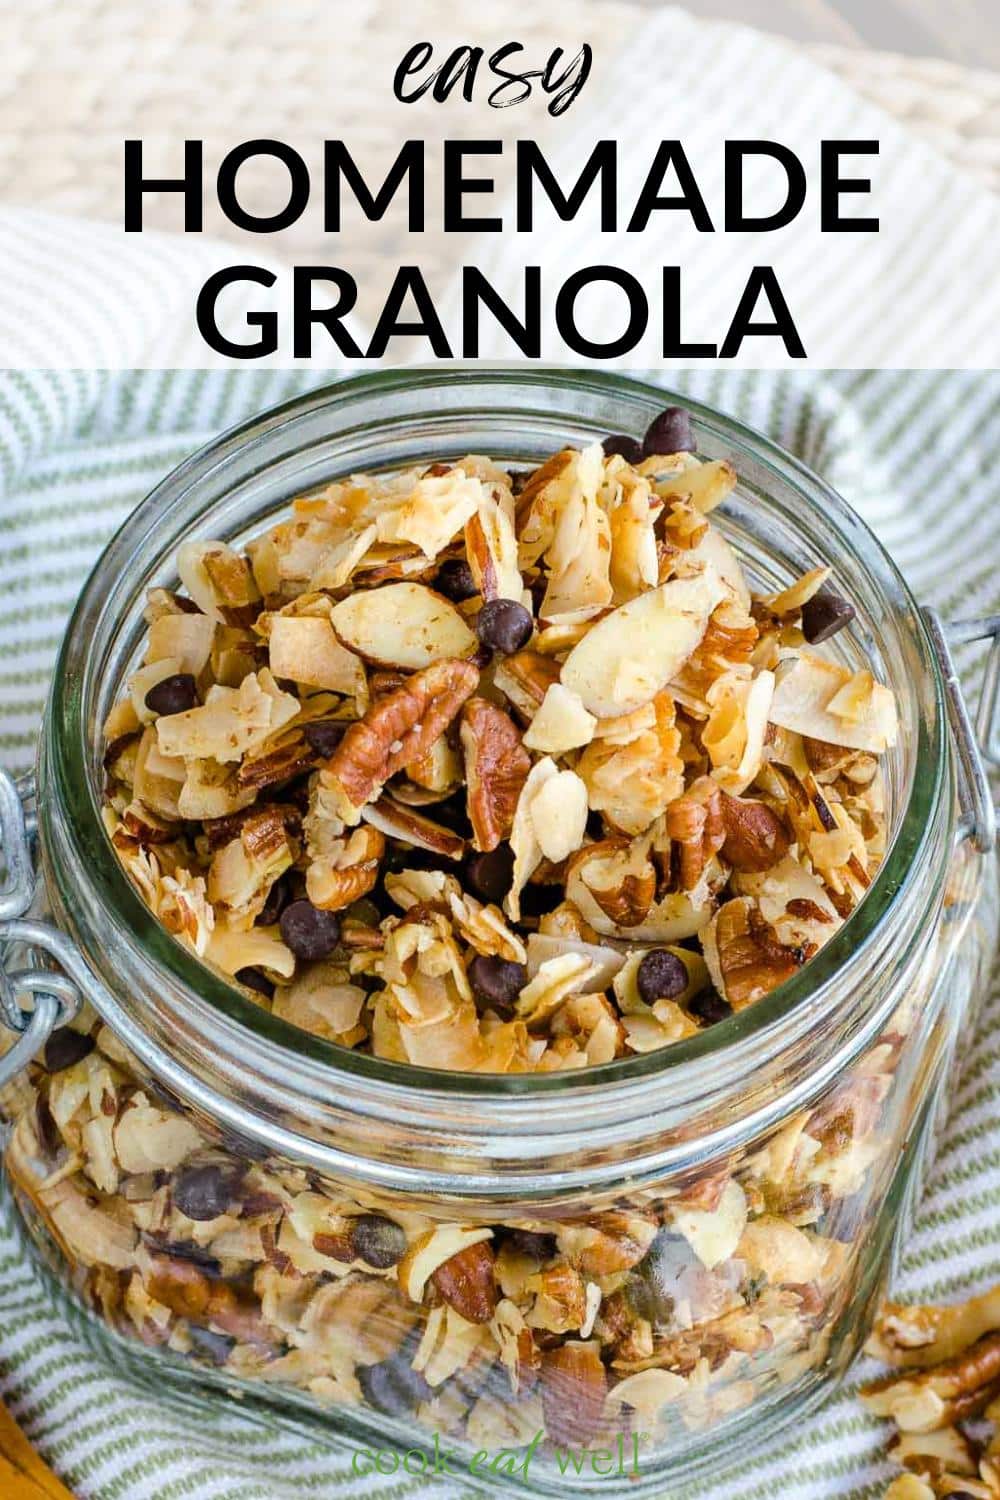 Easy homemade granola